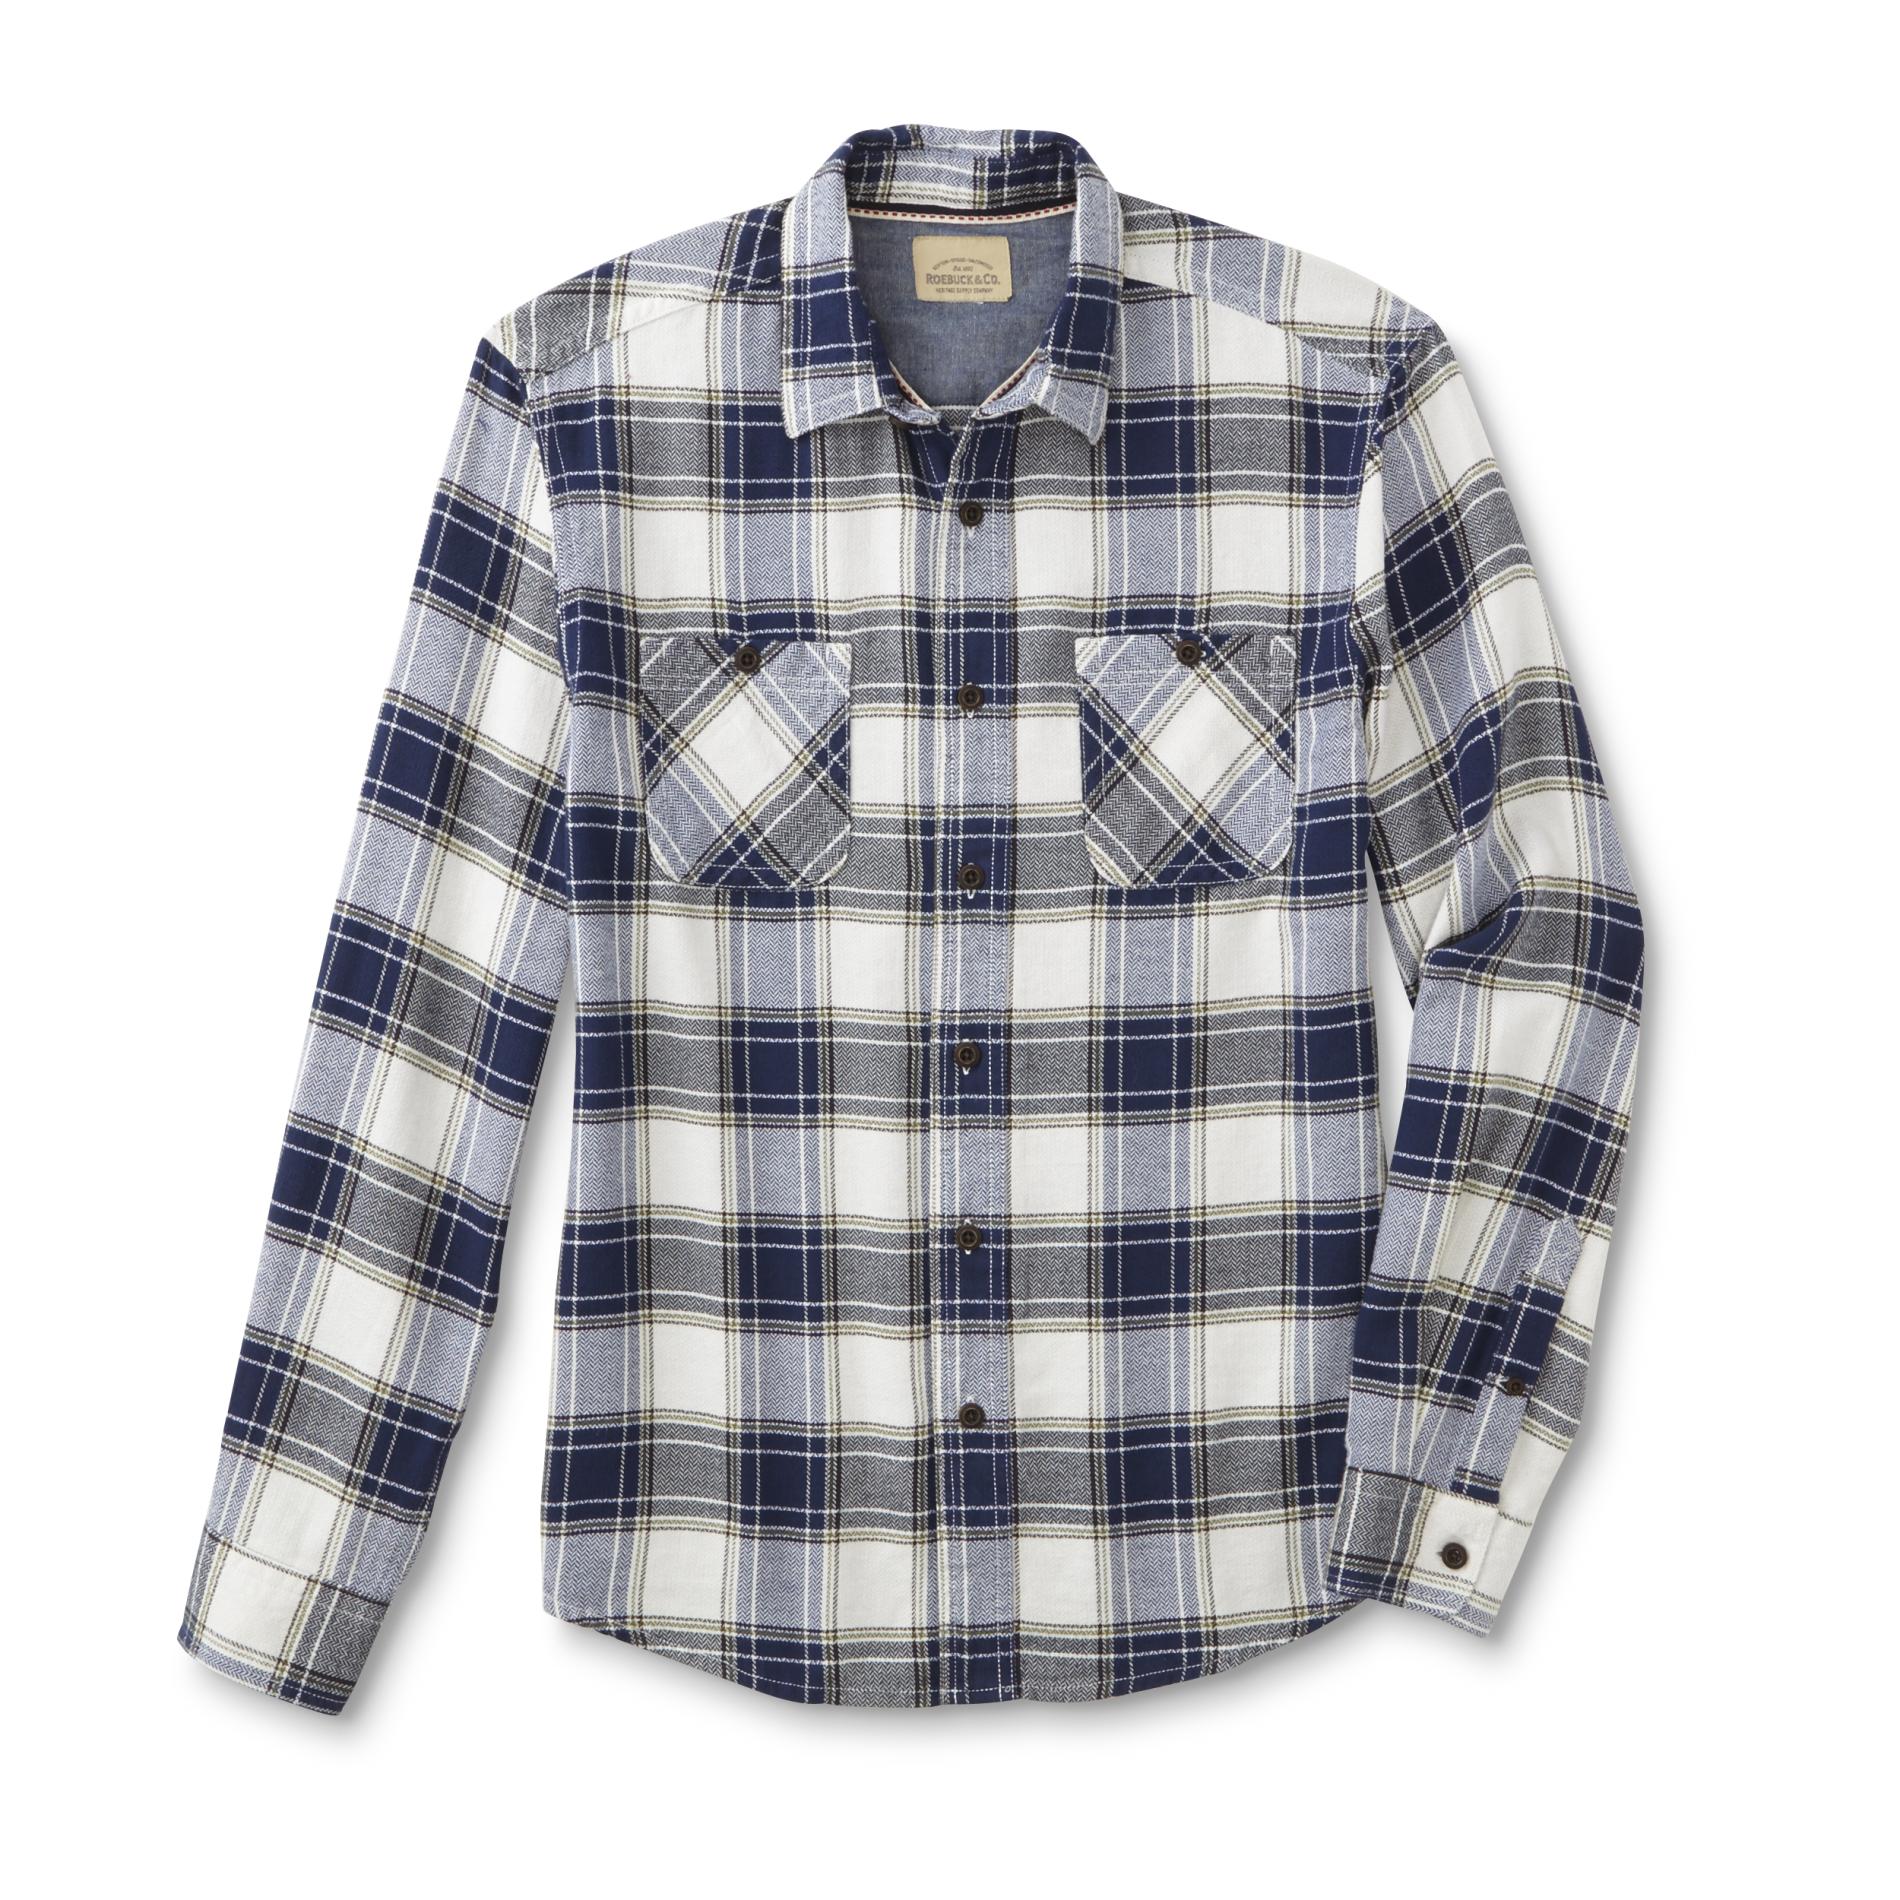 Roebuck & Co. Young Men's Flannel Shirt - Herringbone Plaid